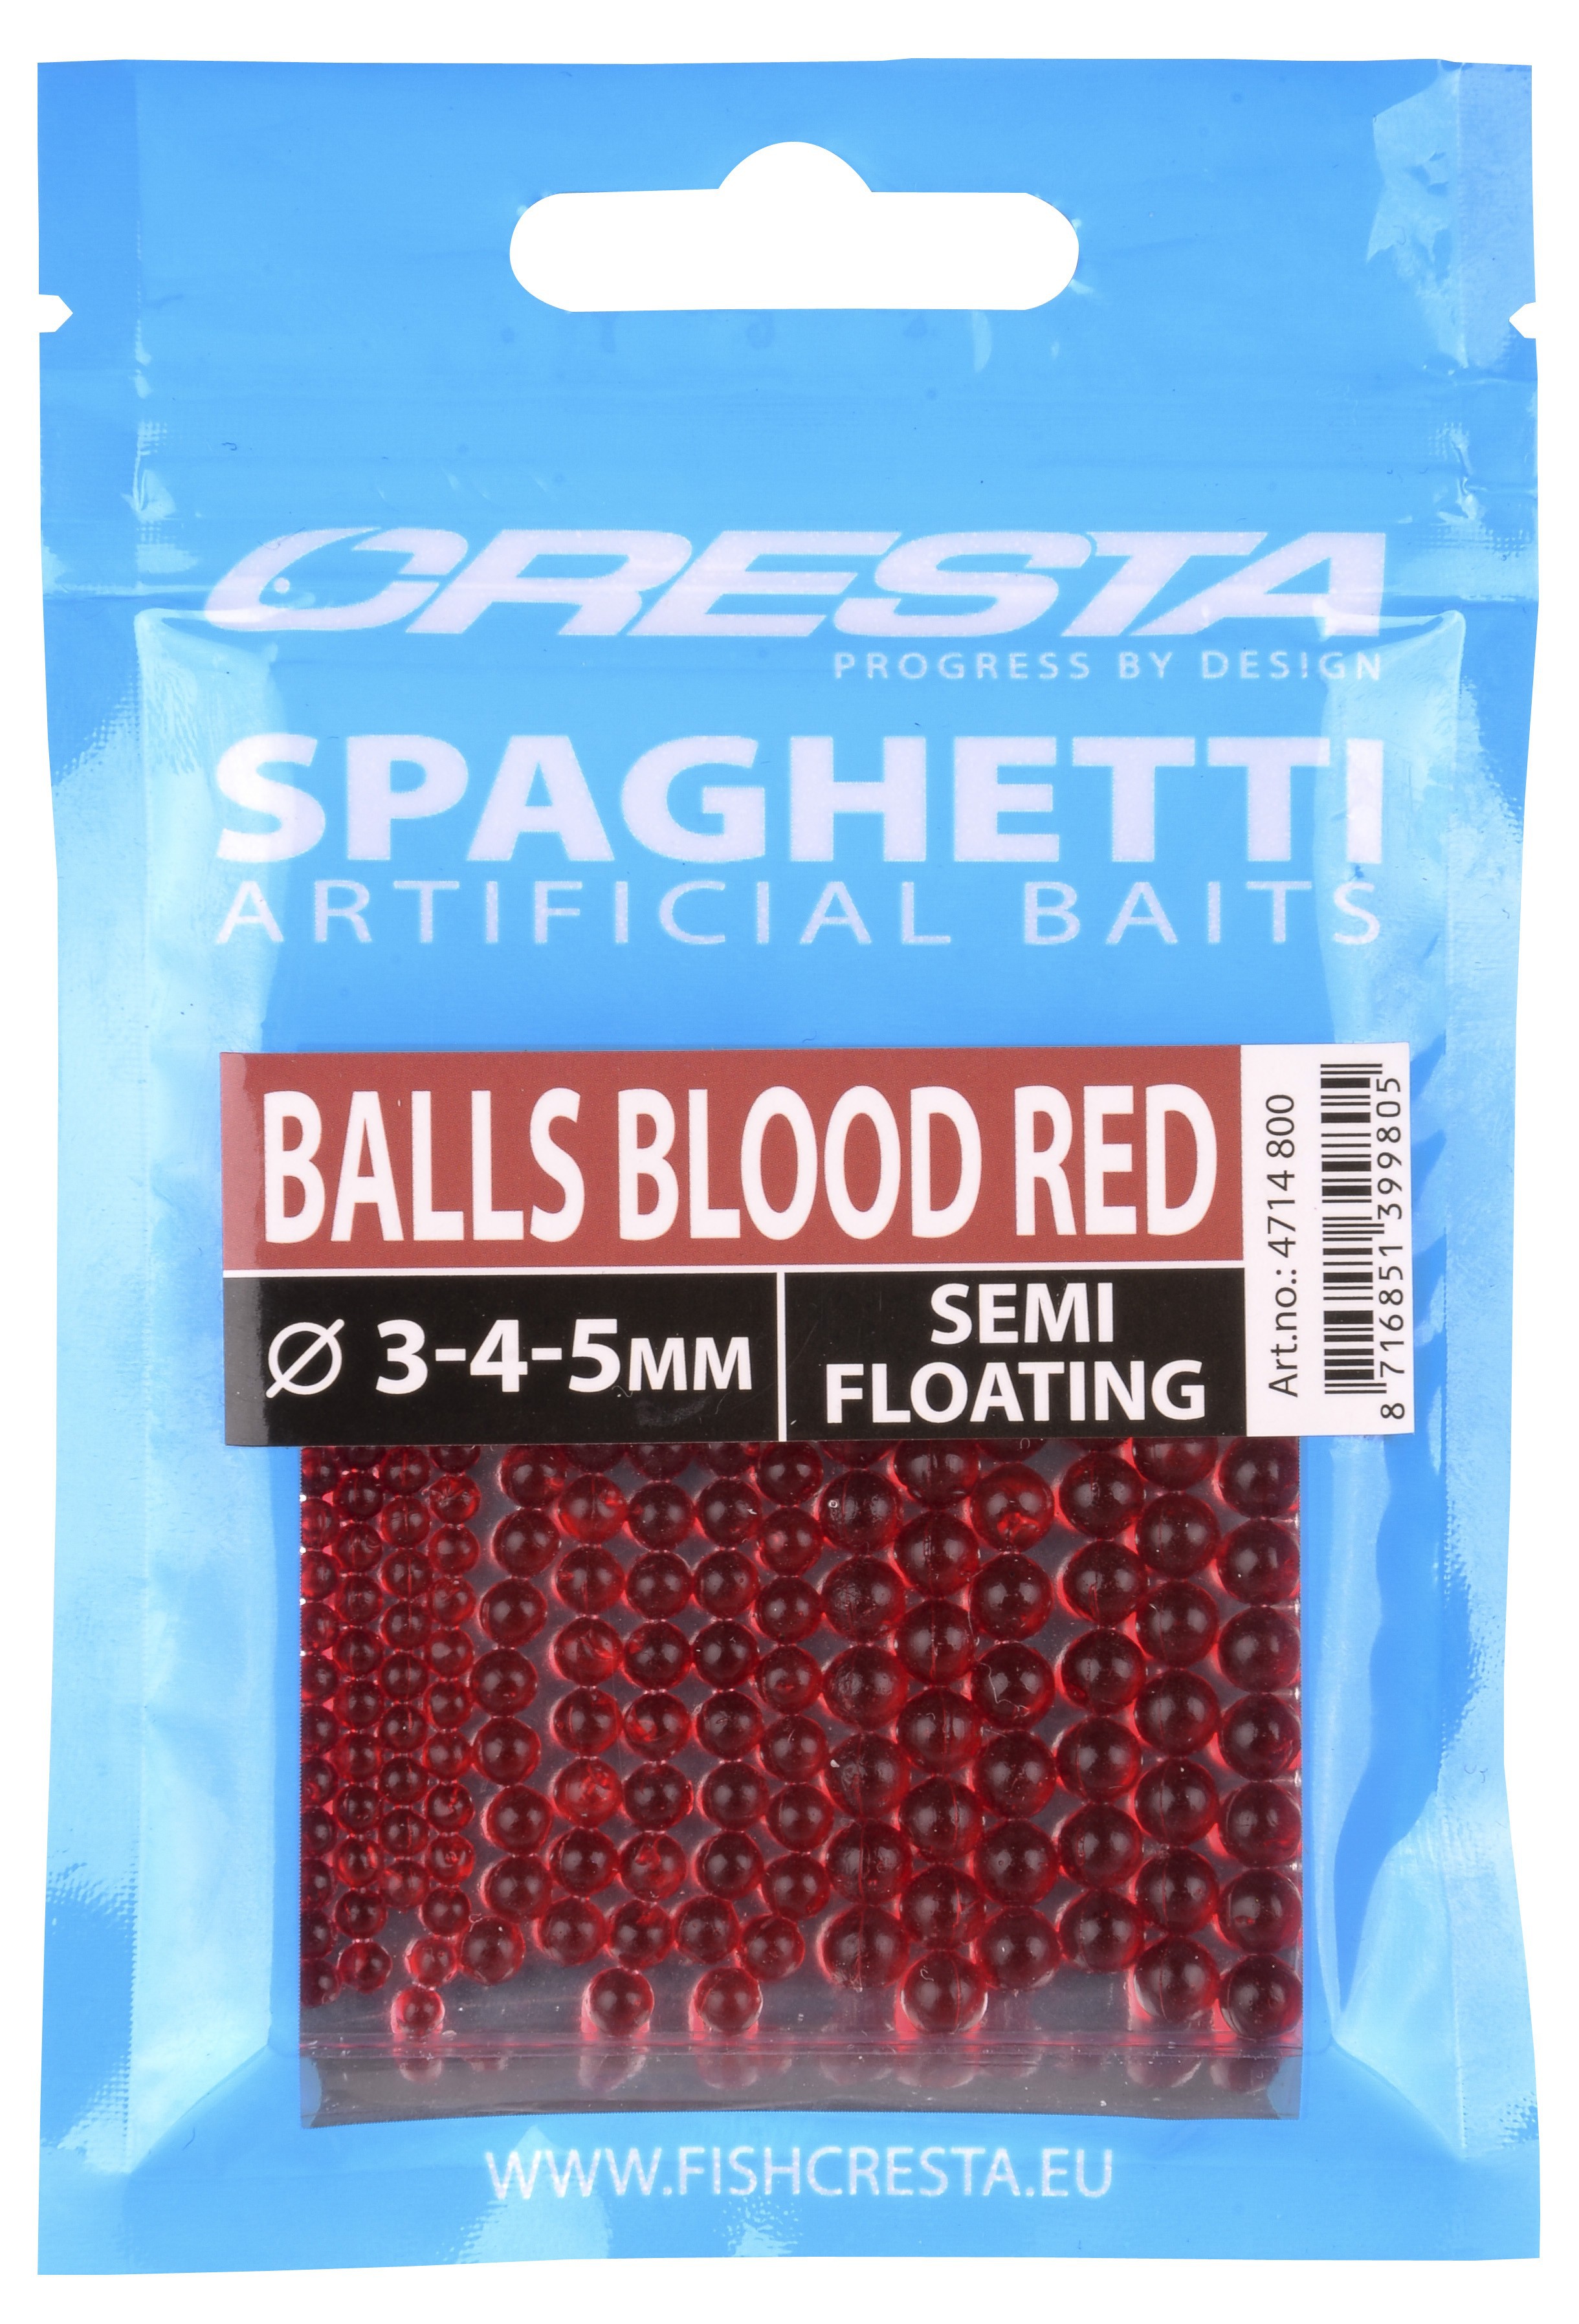 Spro – Cresta Spaghetti Balls Blood Red